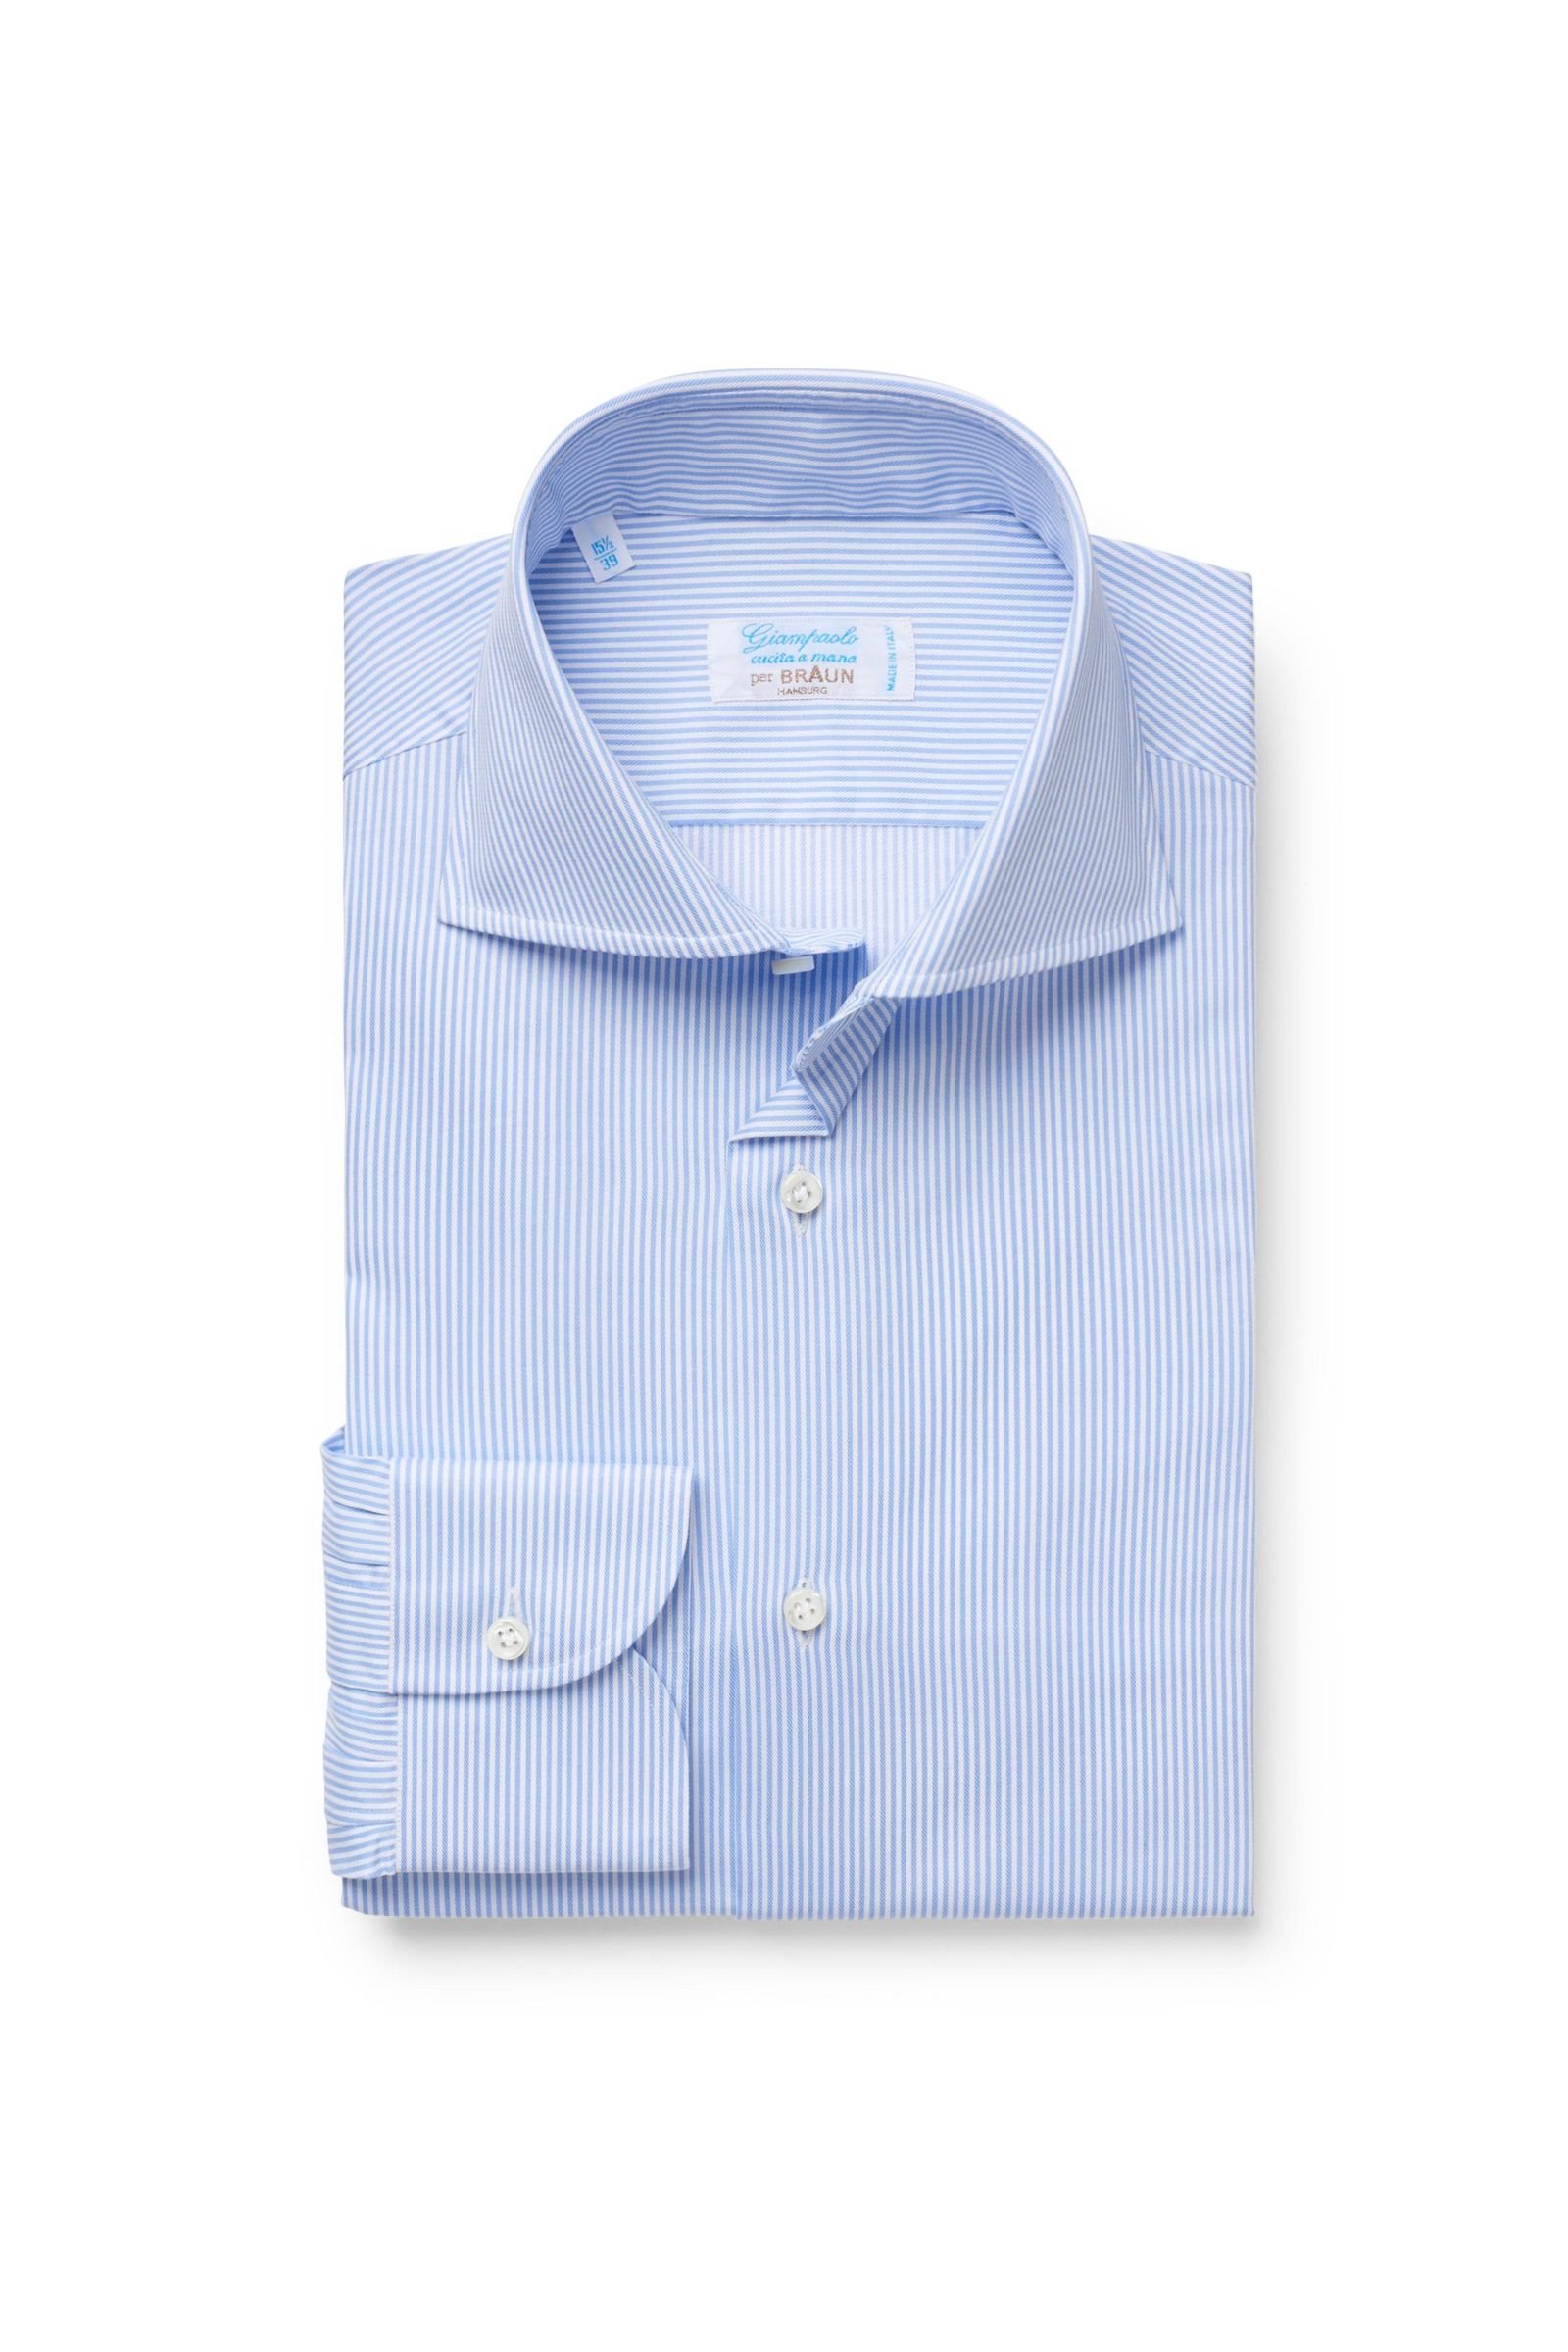 Business shirt shark collar grey-blue/white striped